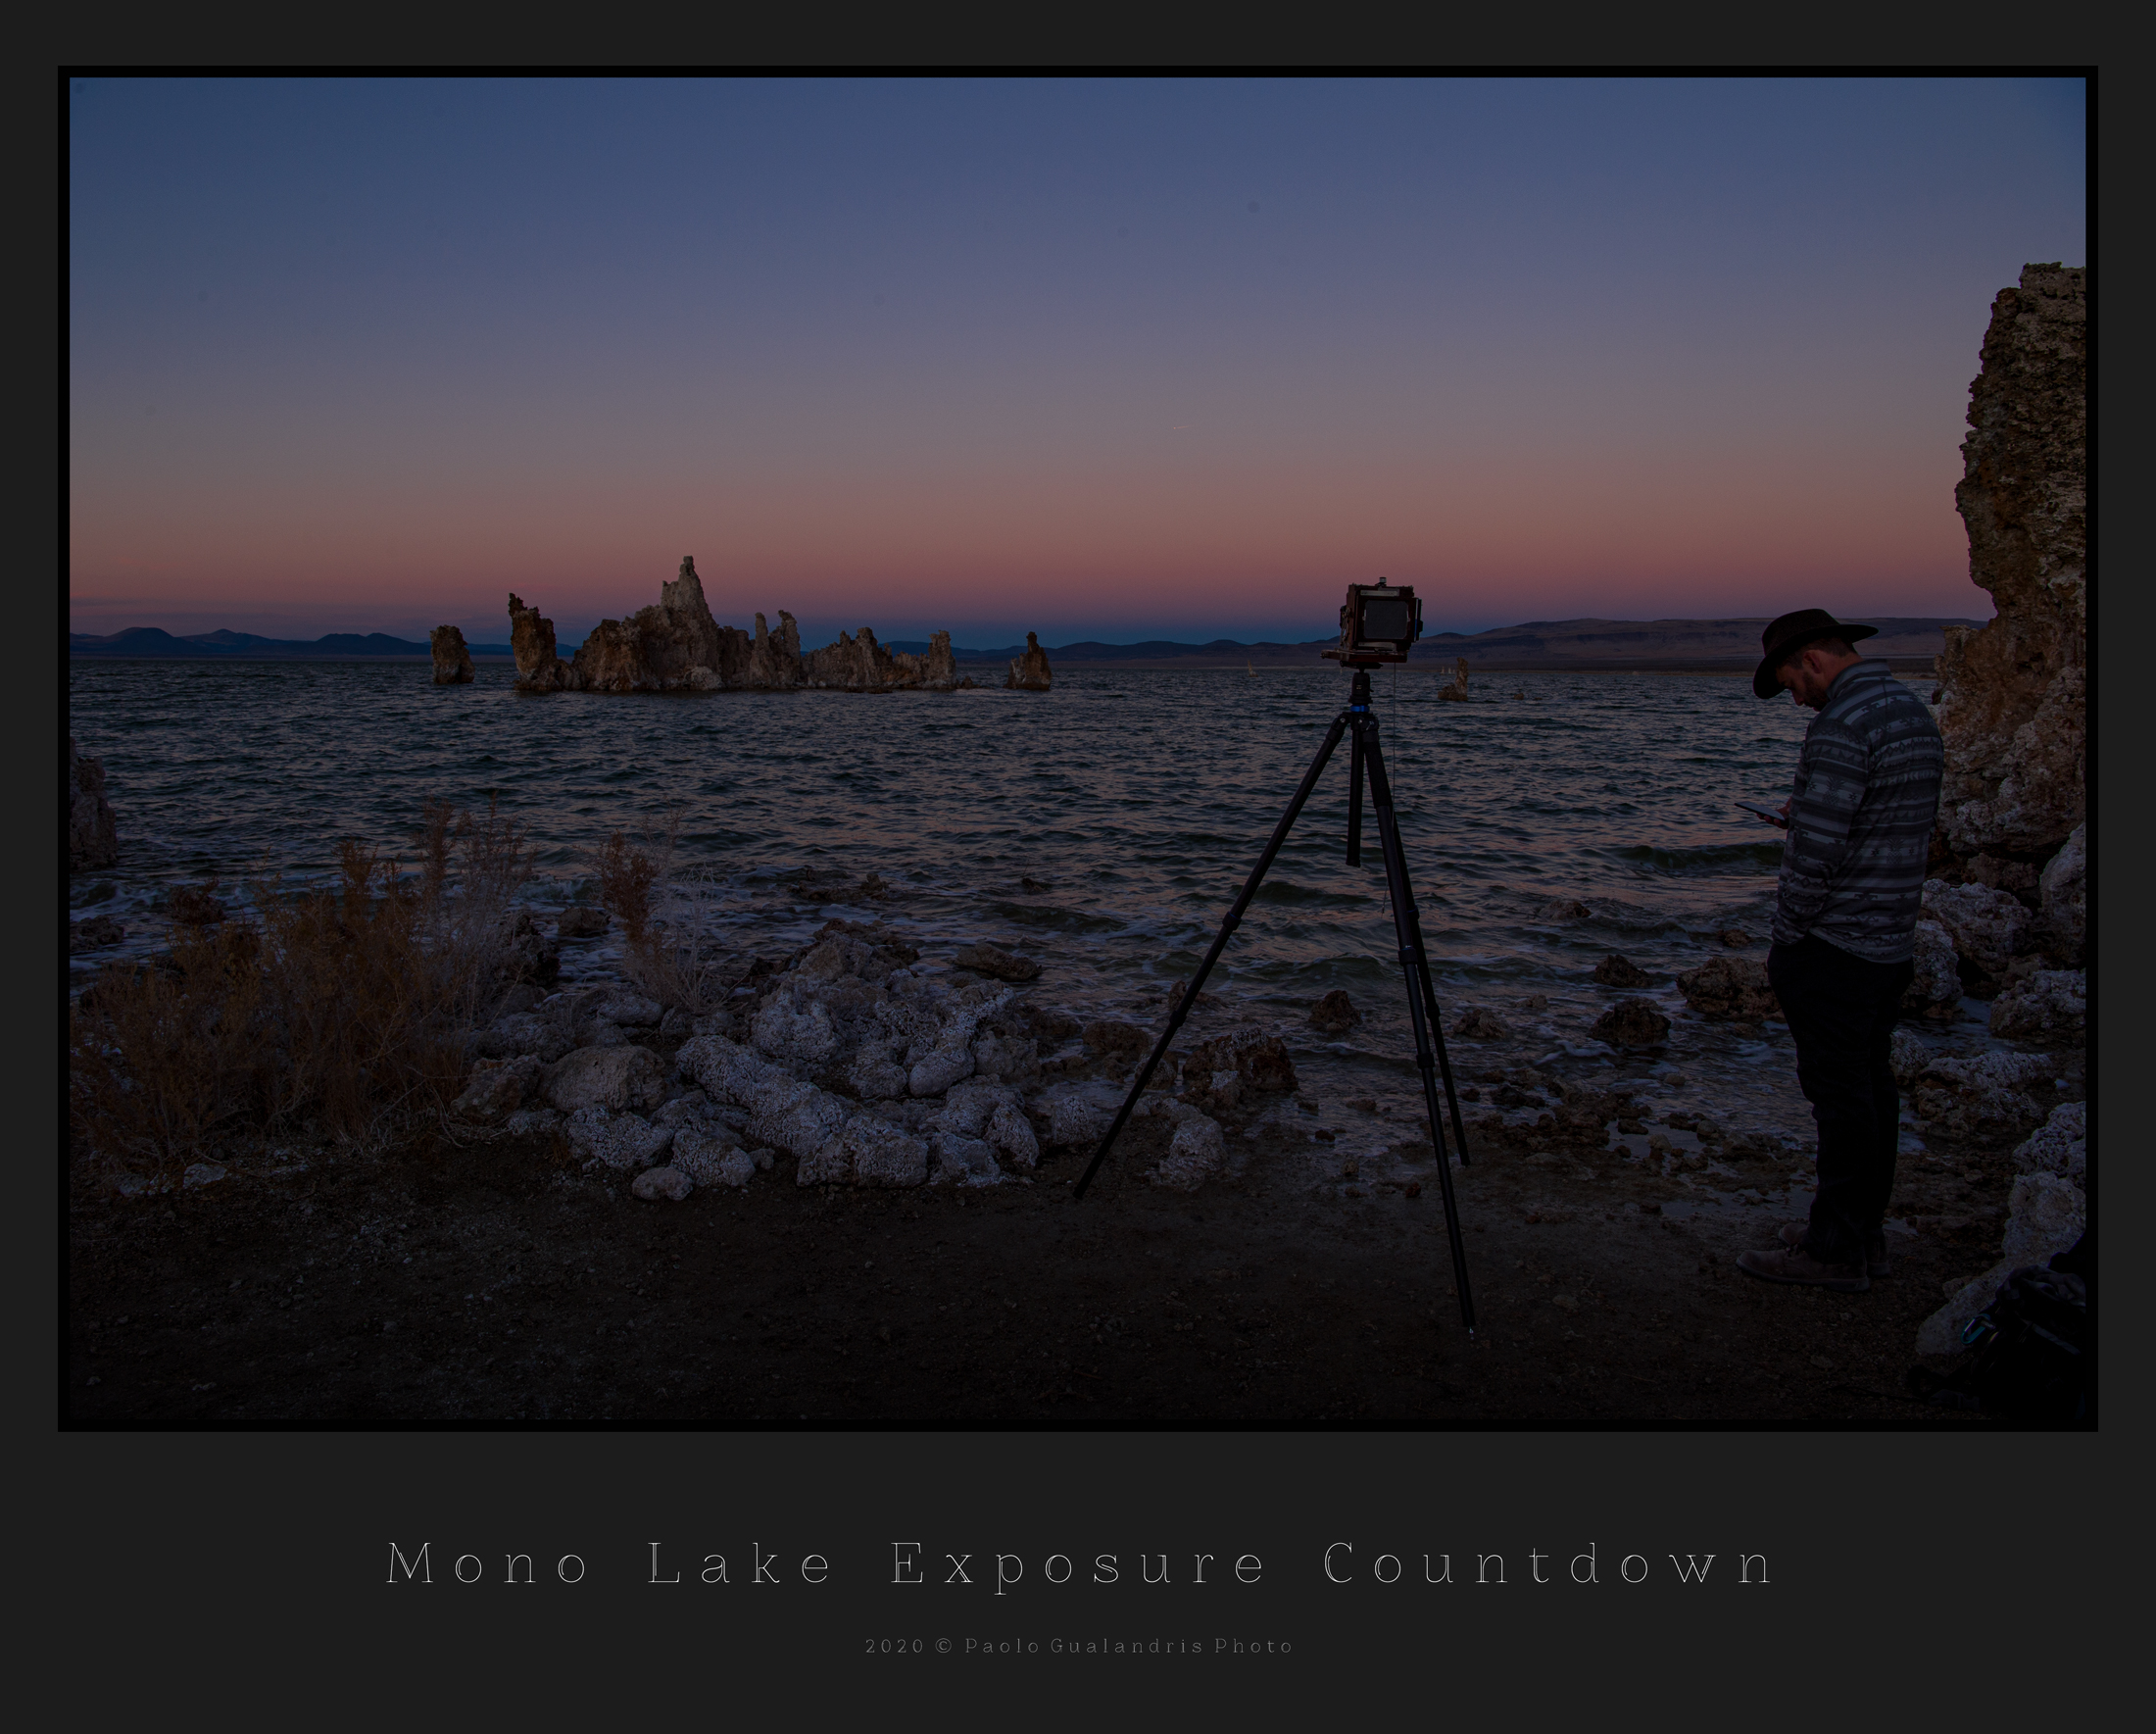 Mono Lake Exposure Countdown...